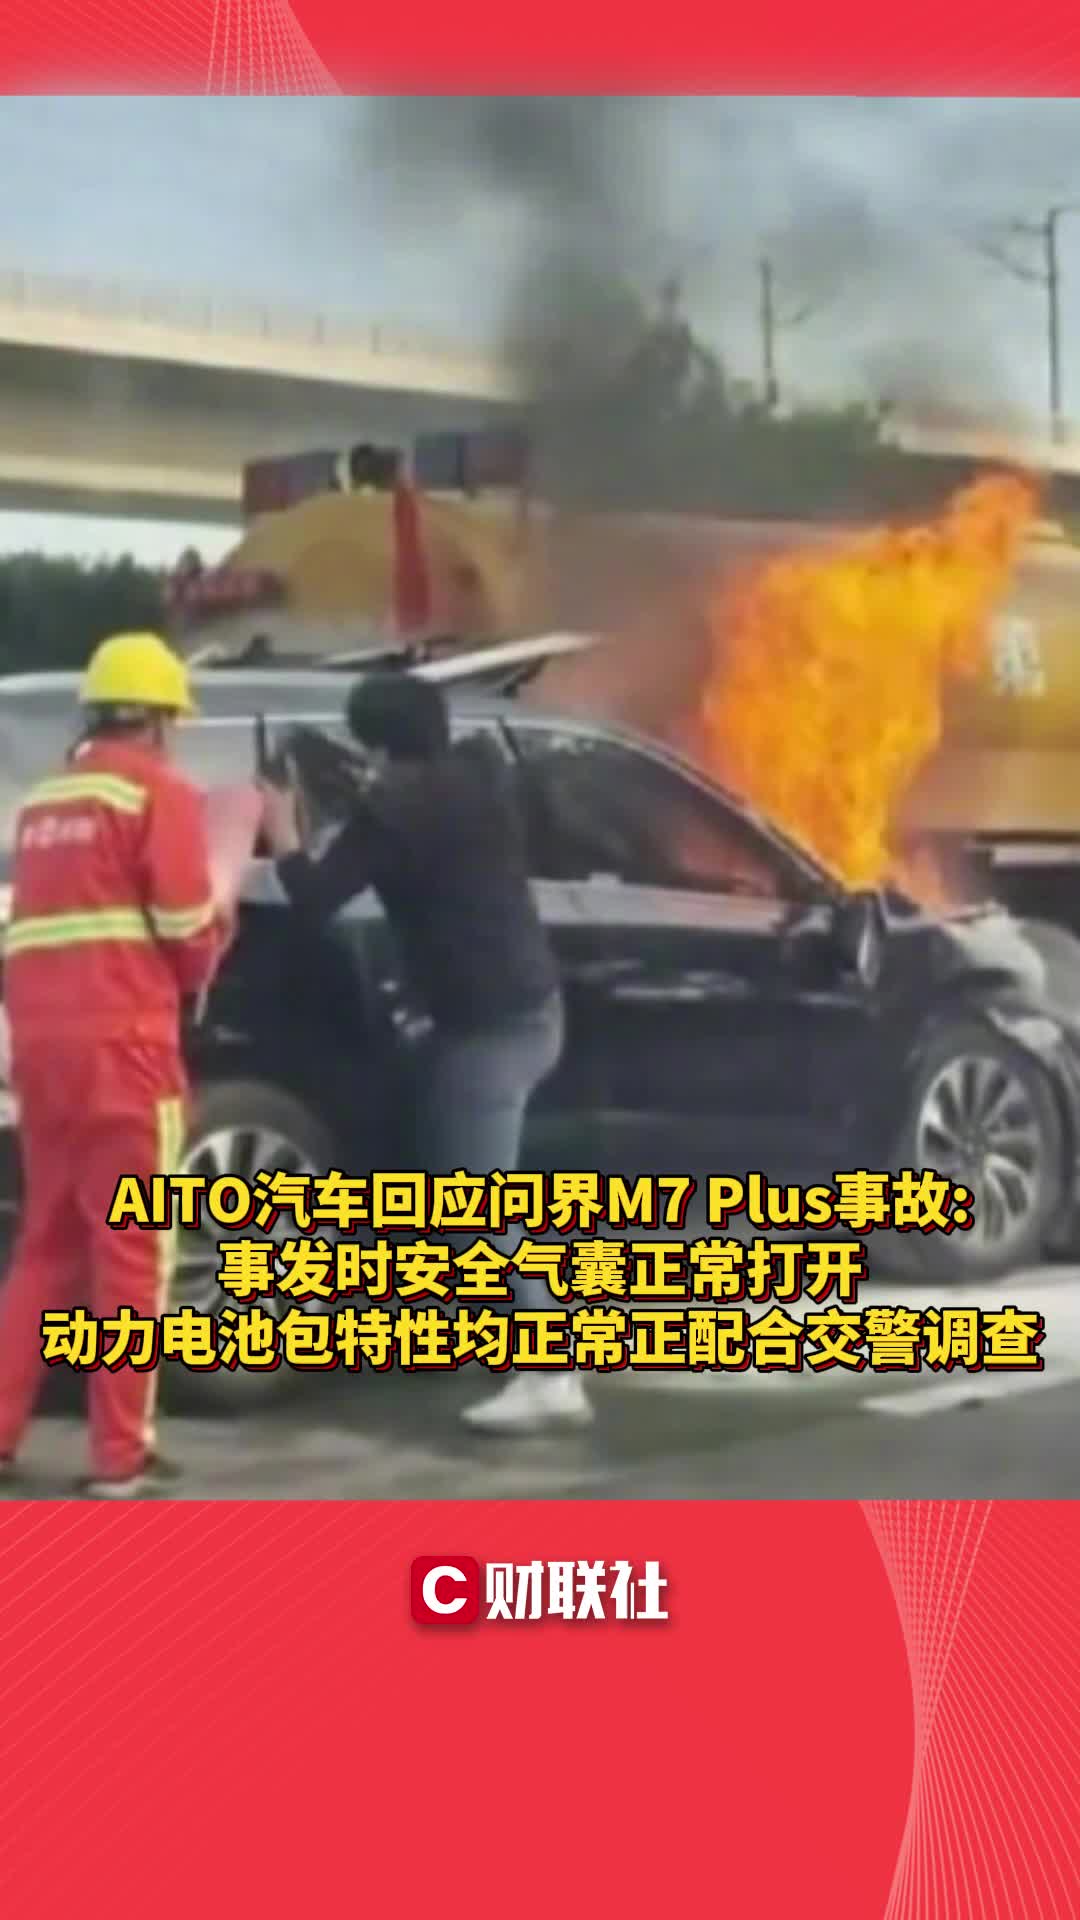 AITO汽车回应问界M7 Plus事故：事发时安全气囊正常打开